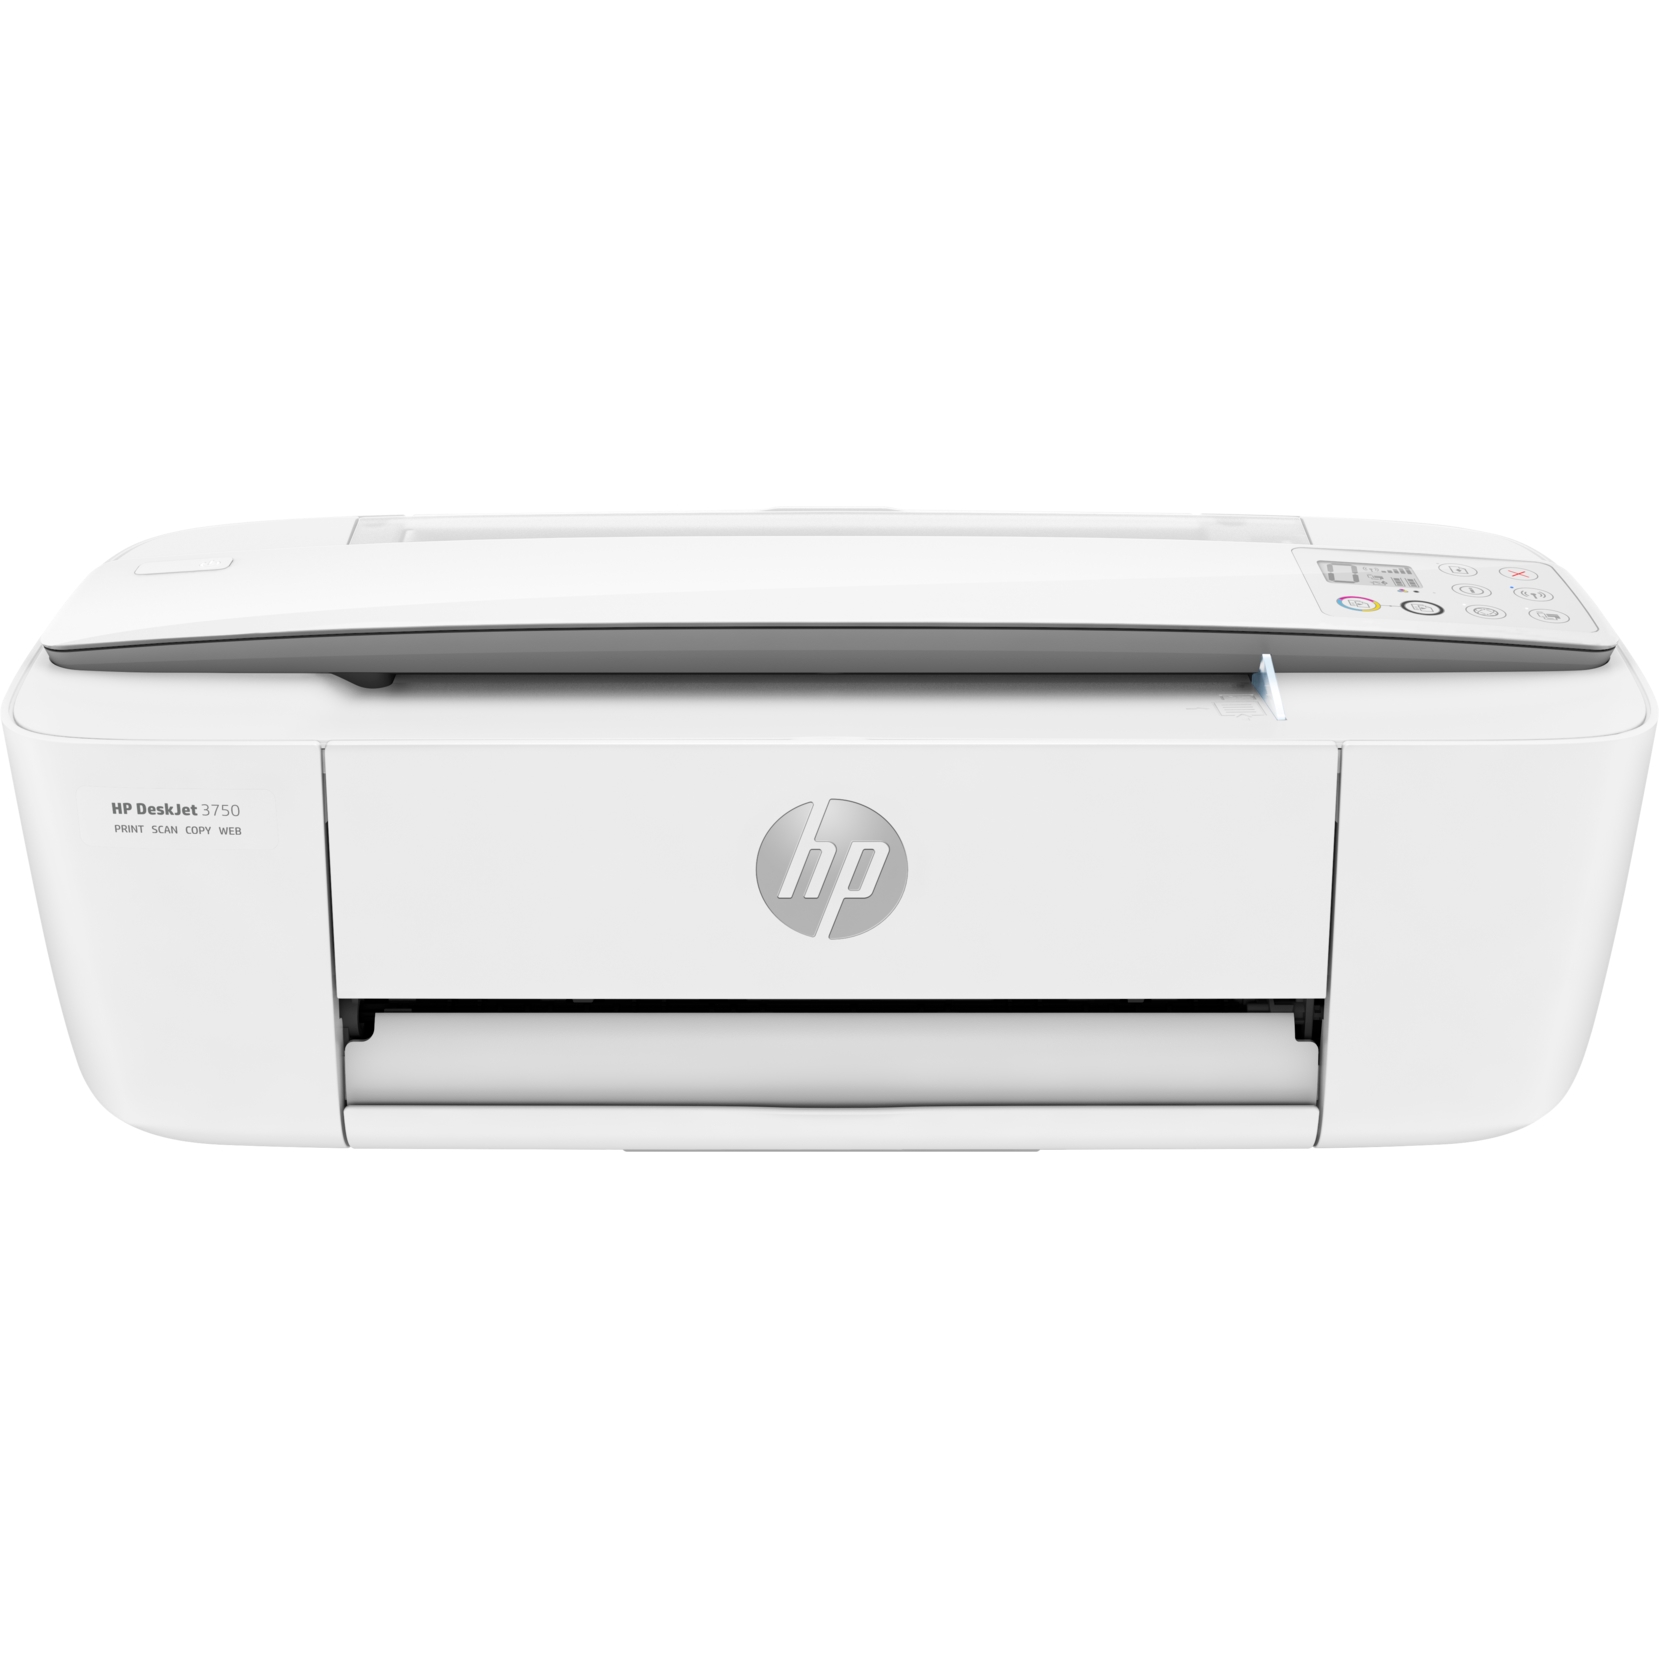 HP DeskJet 3750 All In One Printer